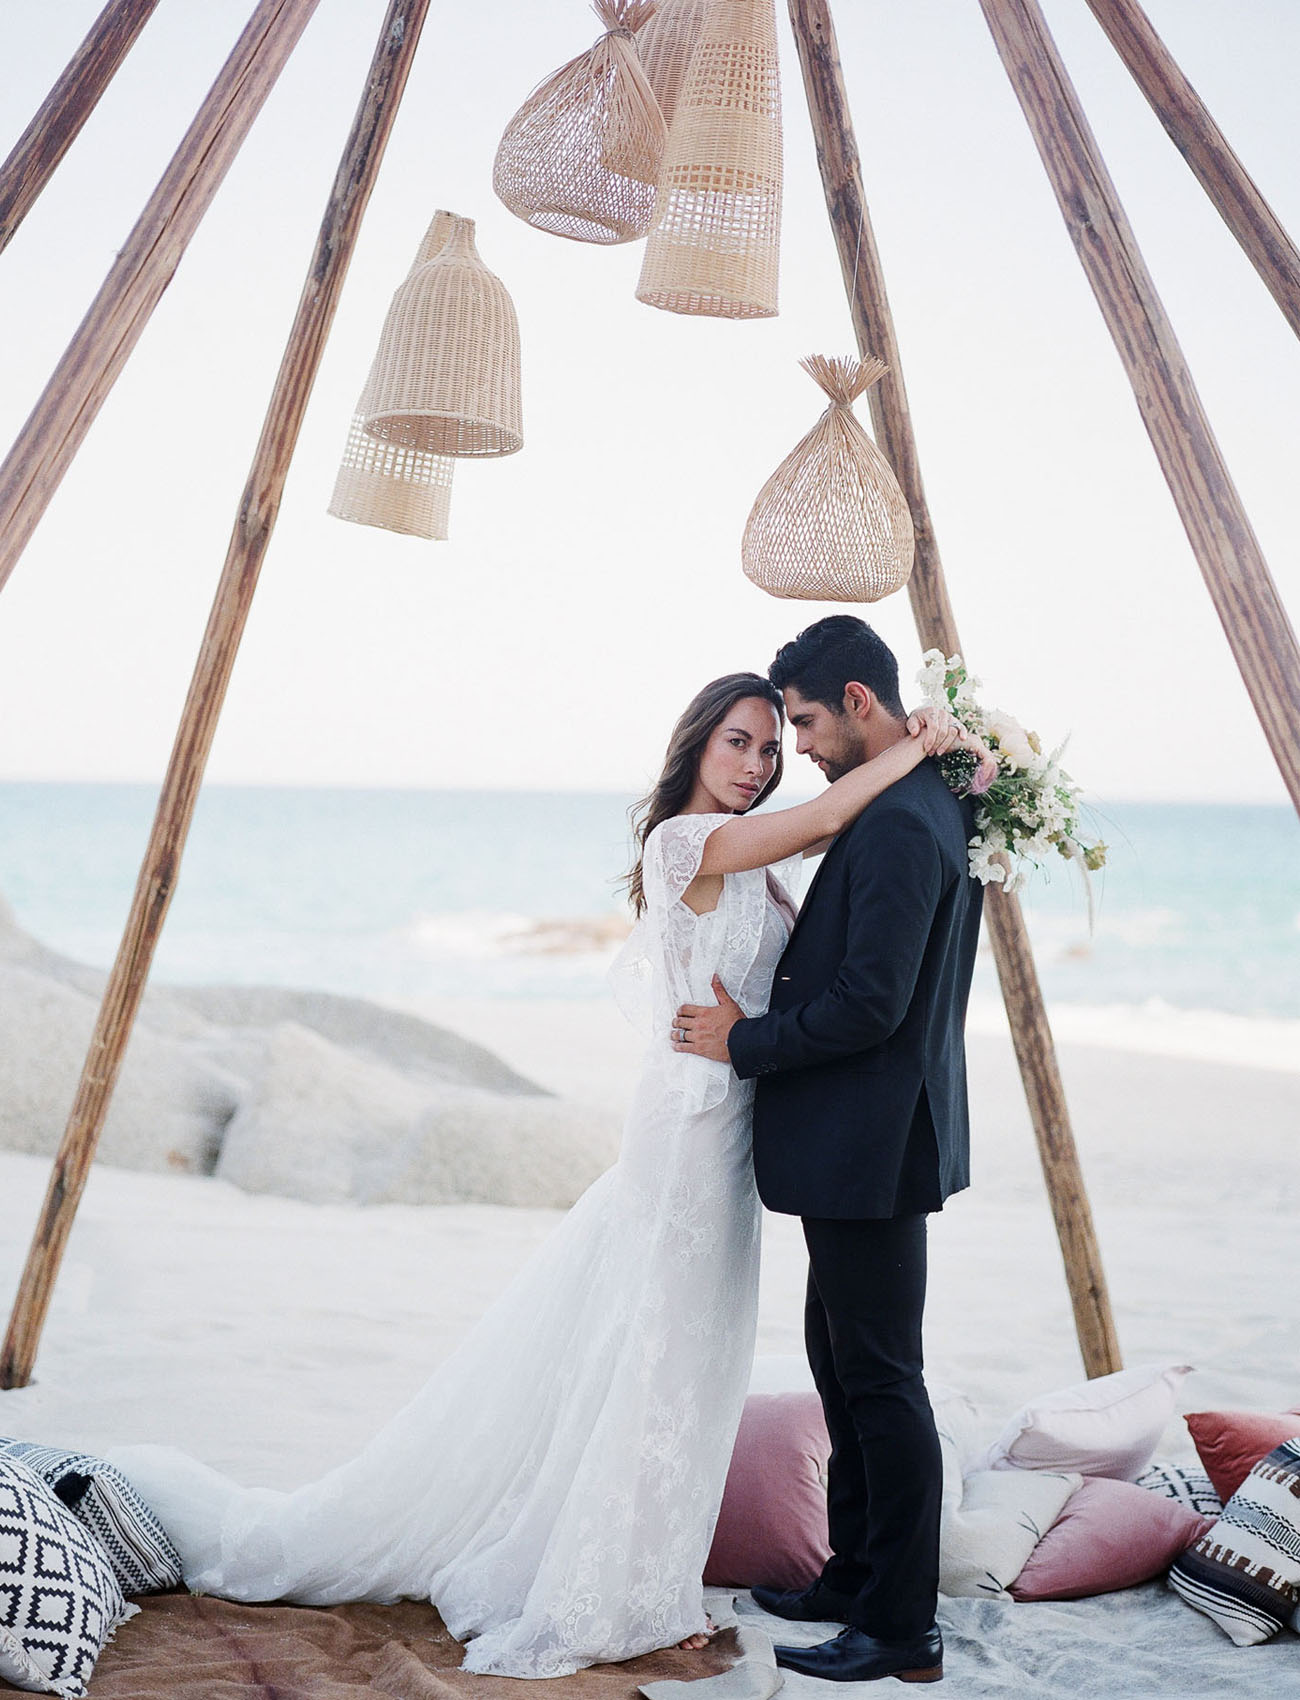 This gorgeous boho beach wedding shoot took place in Mexico